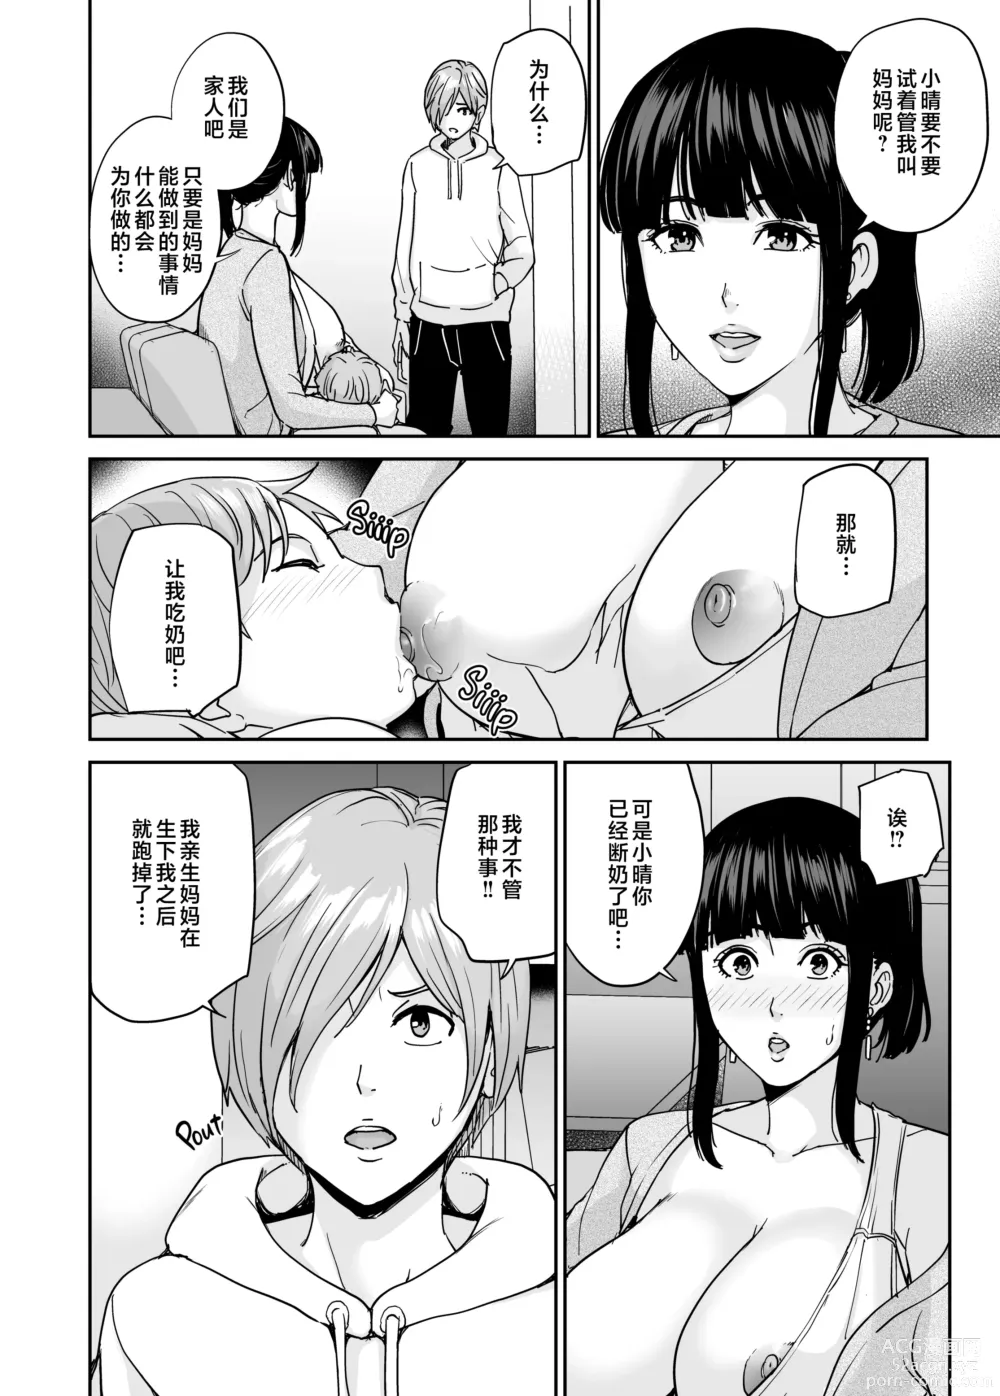 Page 9 of manga いいなりママ